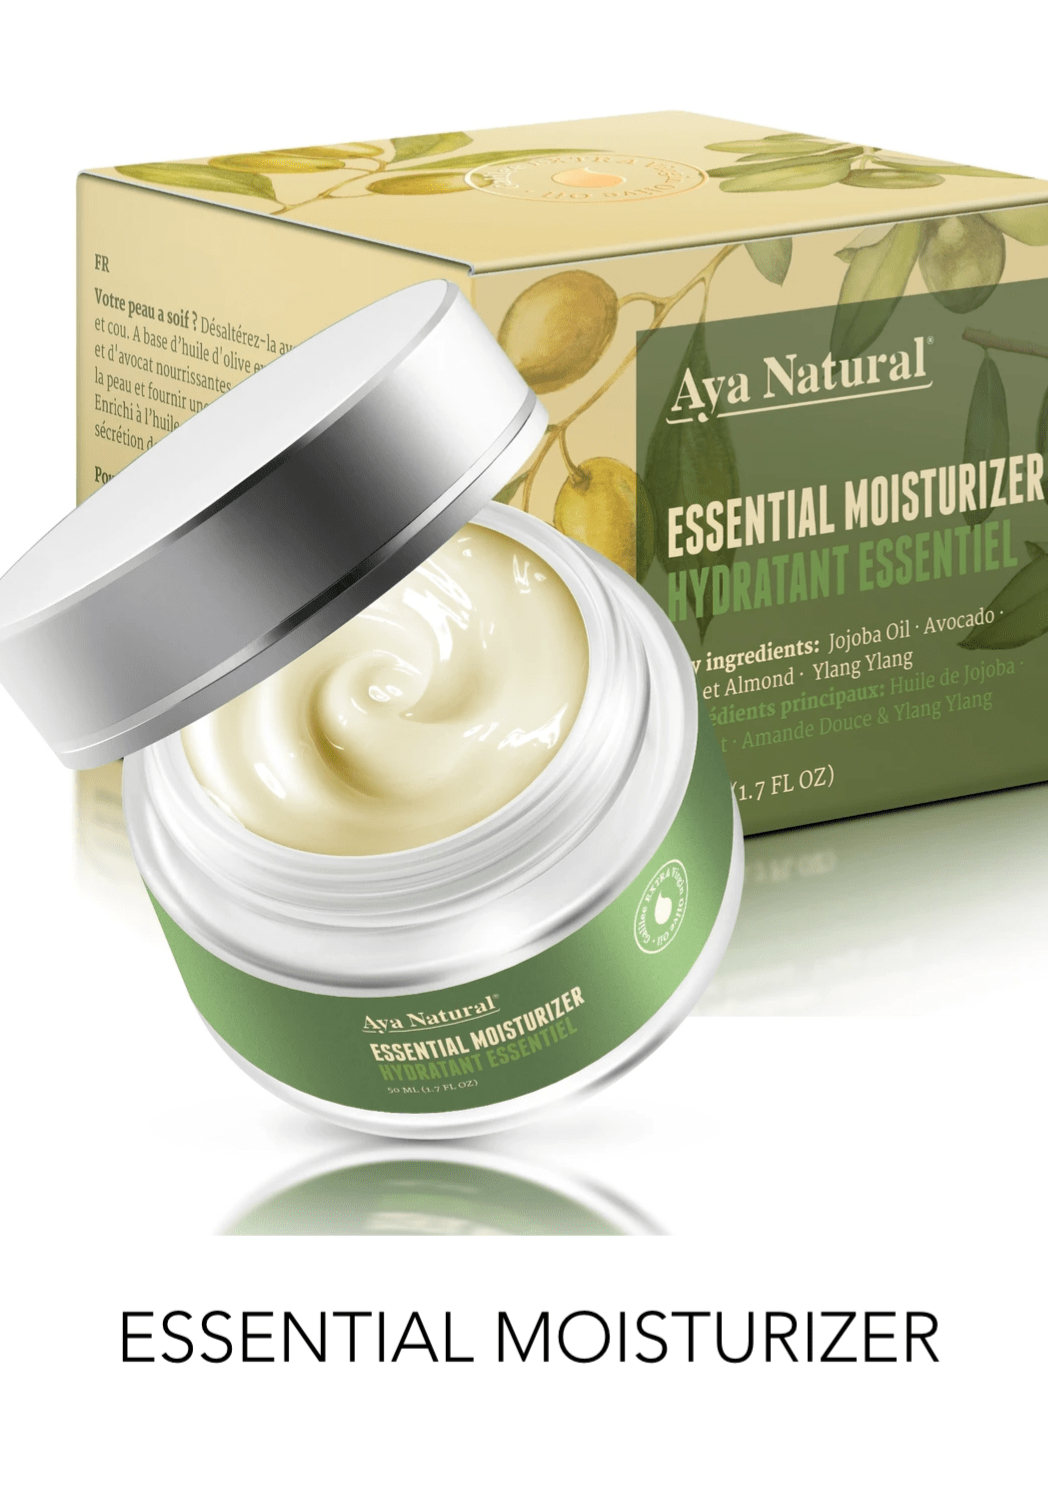 Aya Natural Oils and Creams Aya Natural skin care Essential Moisturizer